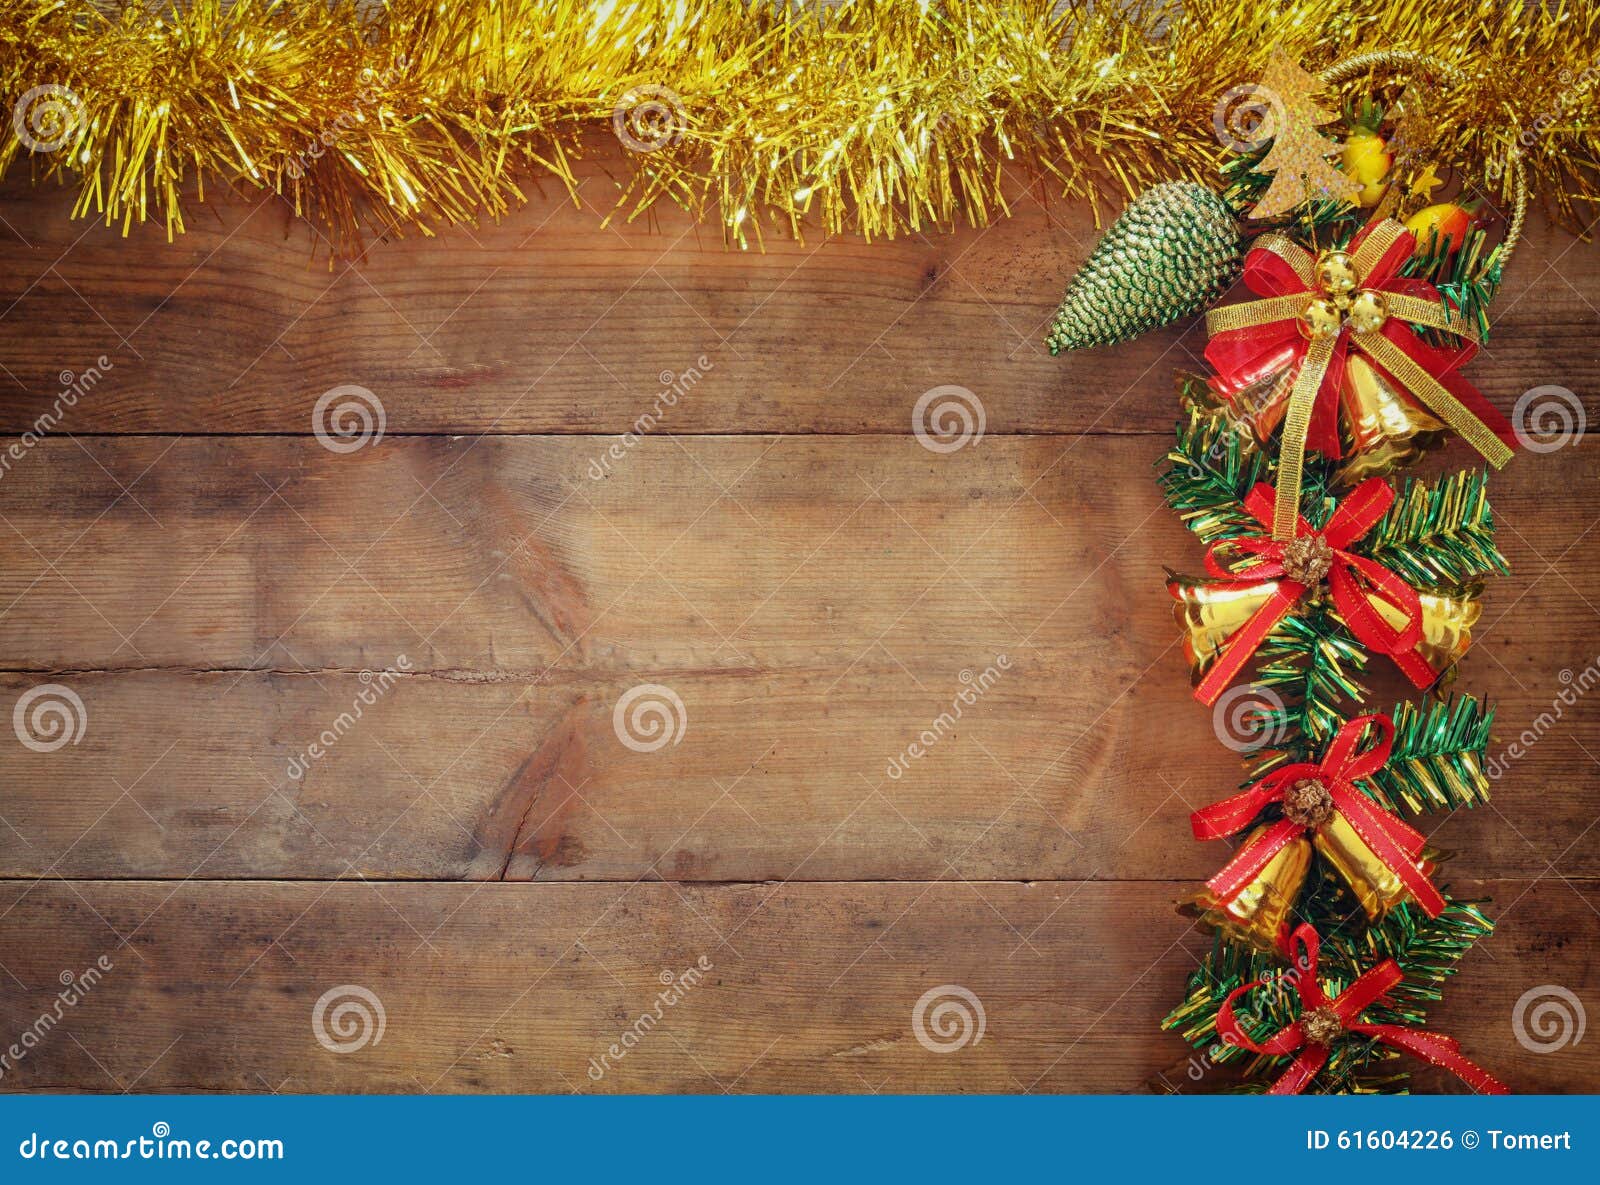 Image of Christmas Festive Decorations on Wooden Background. Retro ...